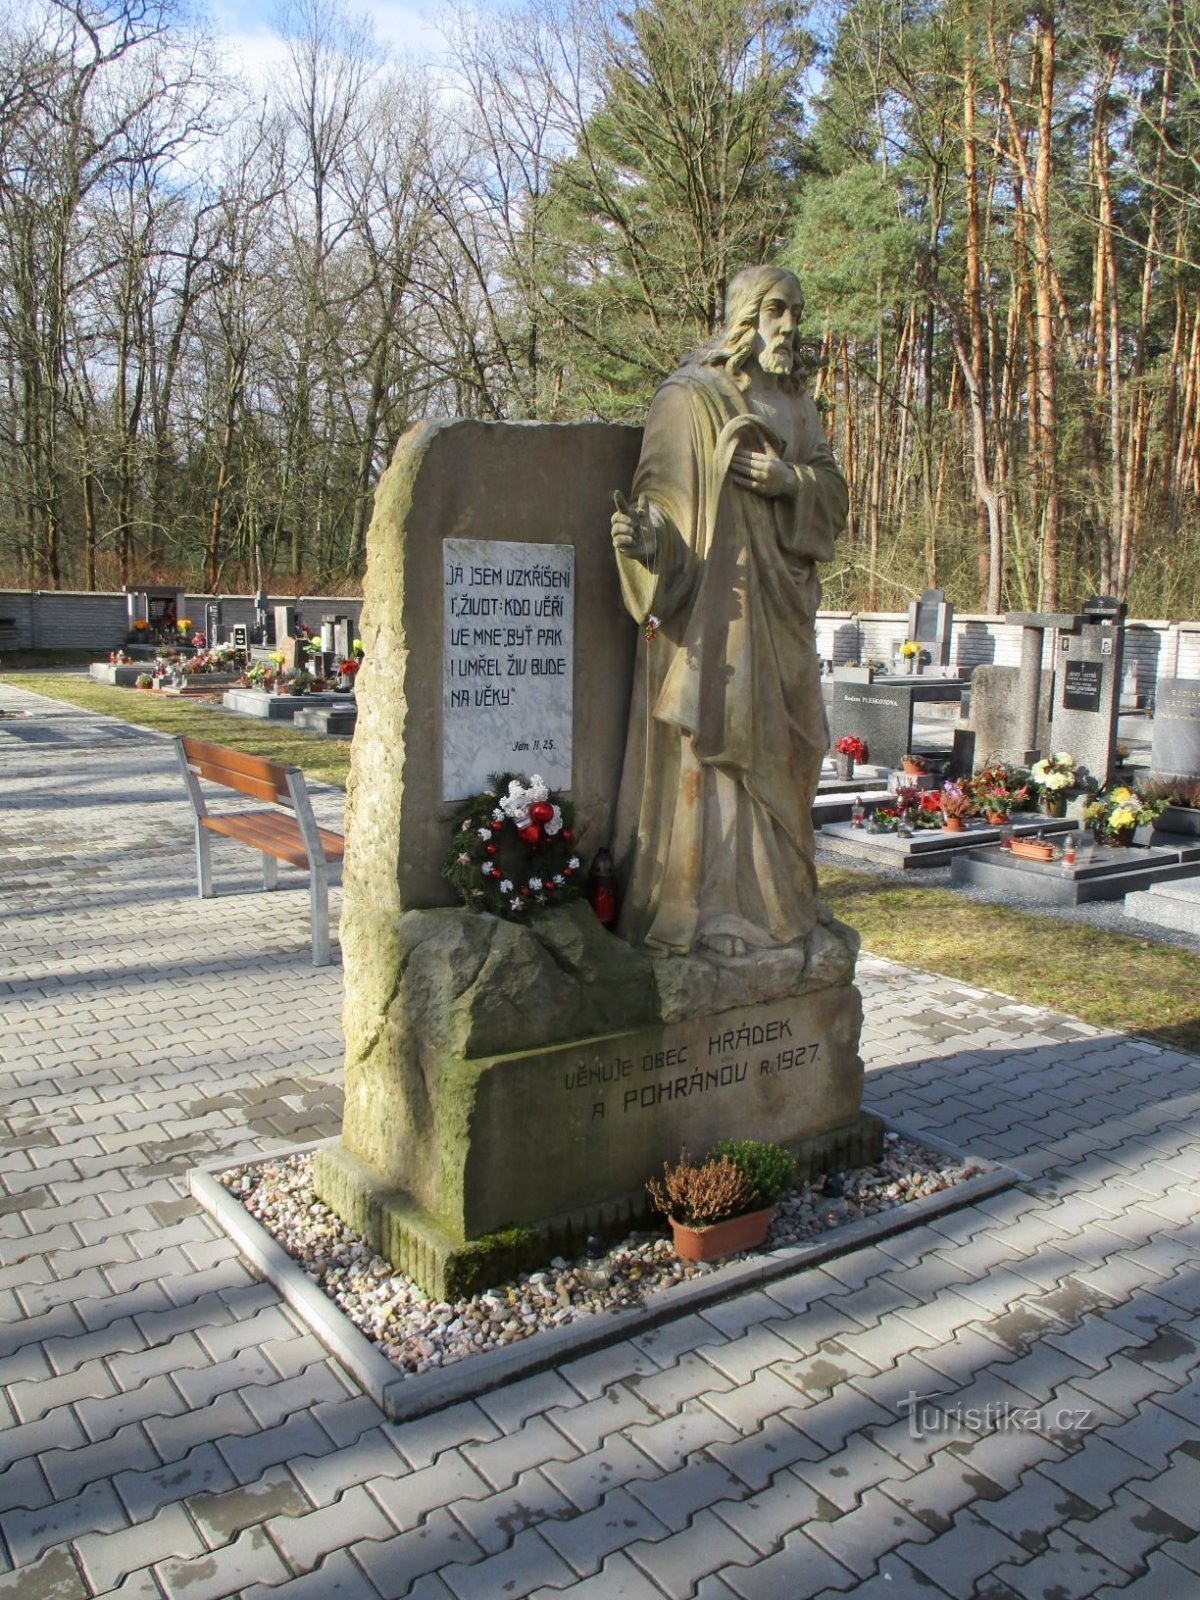 Standbeeld van Jezus Christus op de begraafplaats (Hrádek, 20.2.2020/XNUMX/XNUMX)